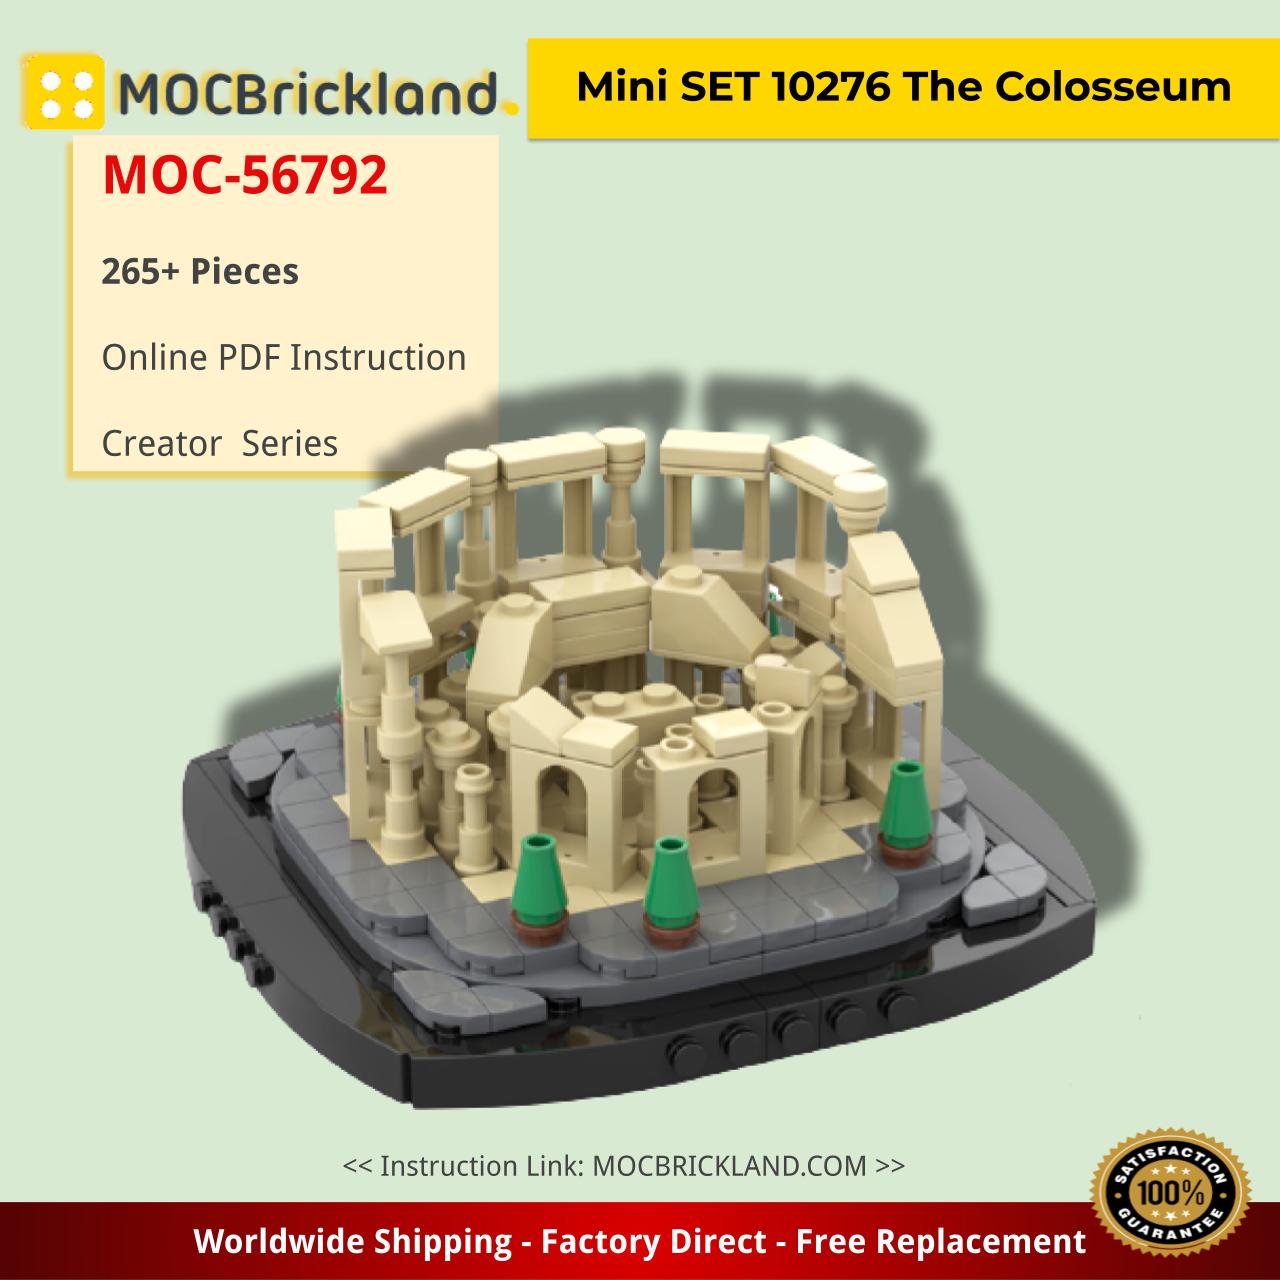 MOCBRICKLAND MOC-56792 Mini Set 10276 The Colosseum